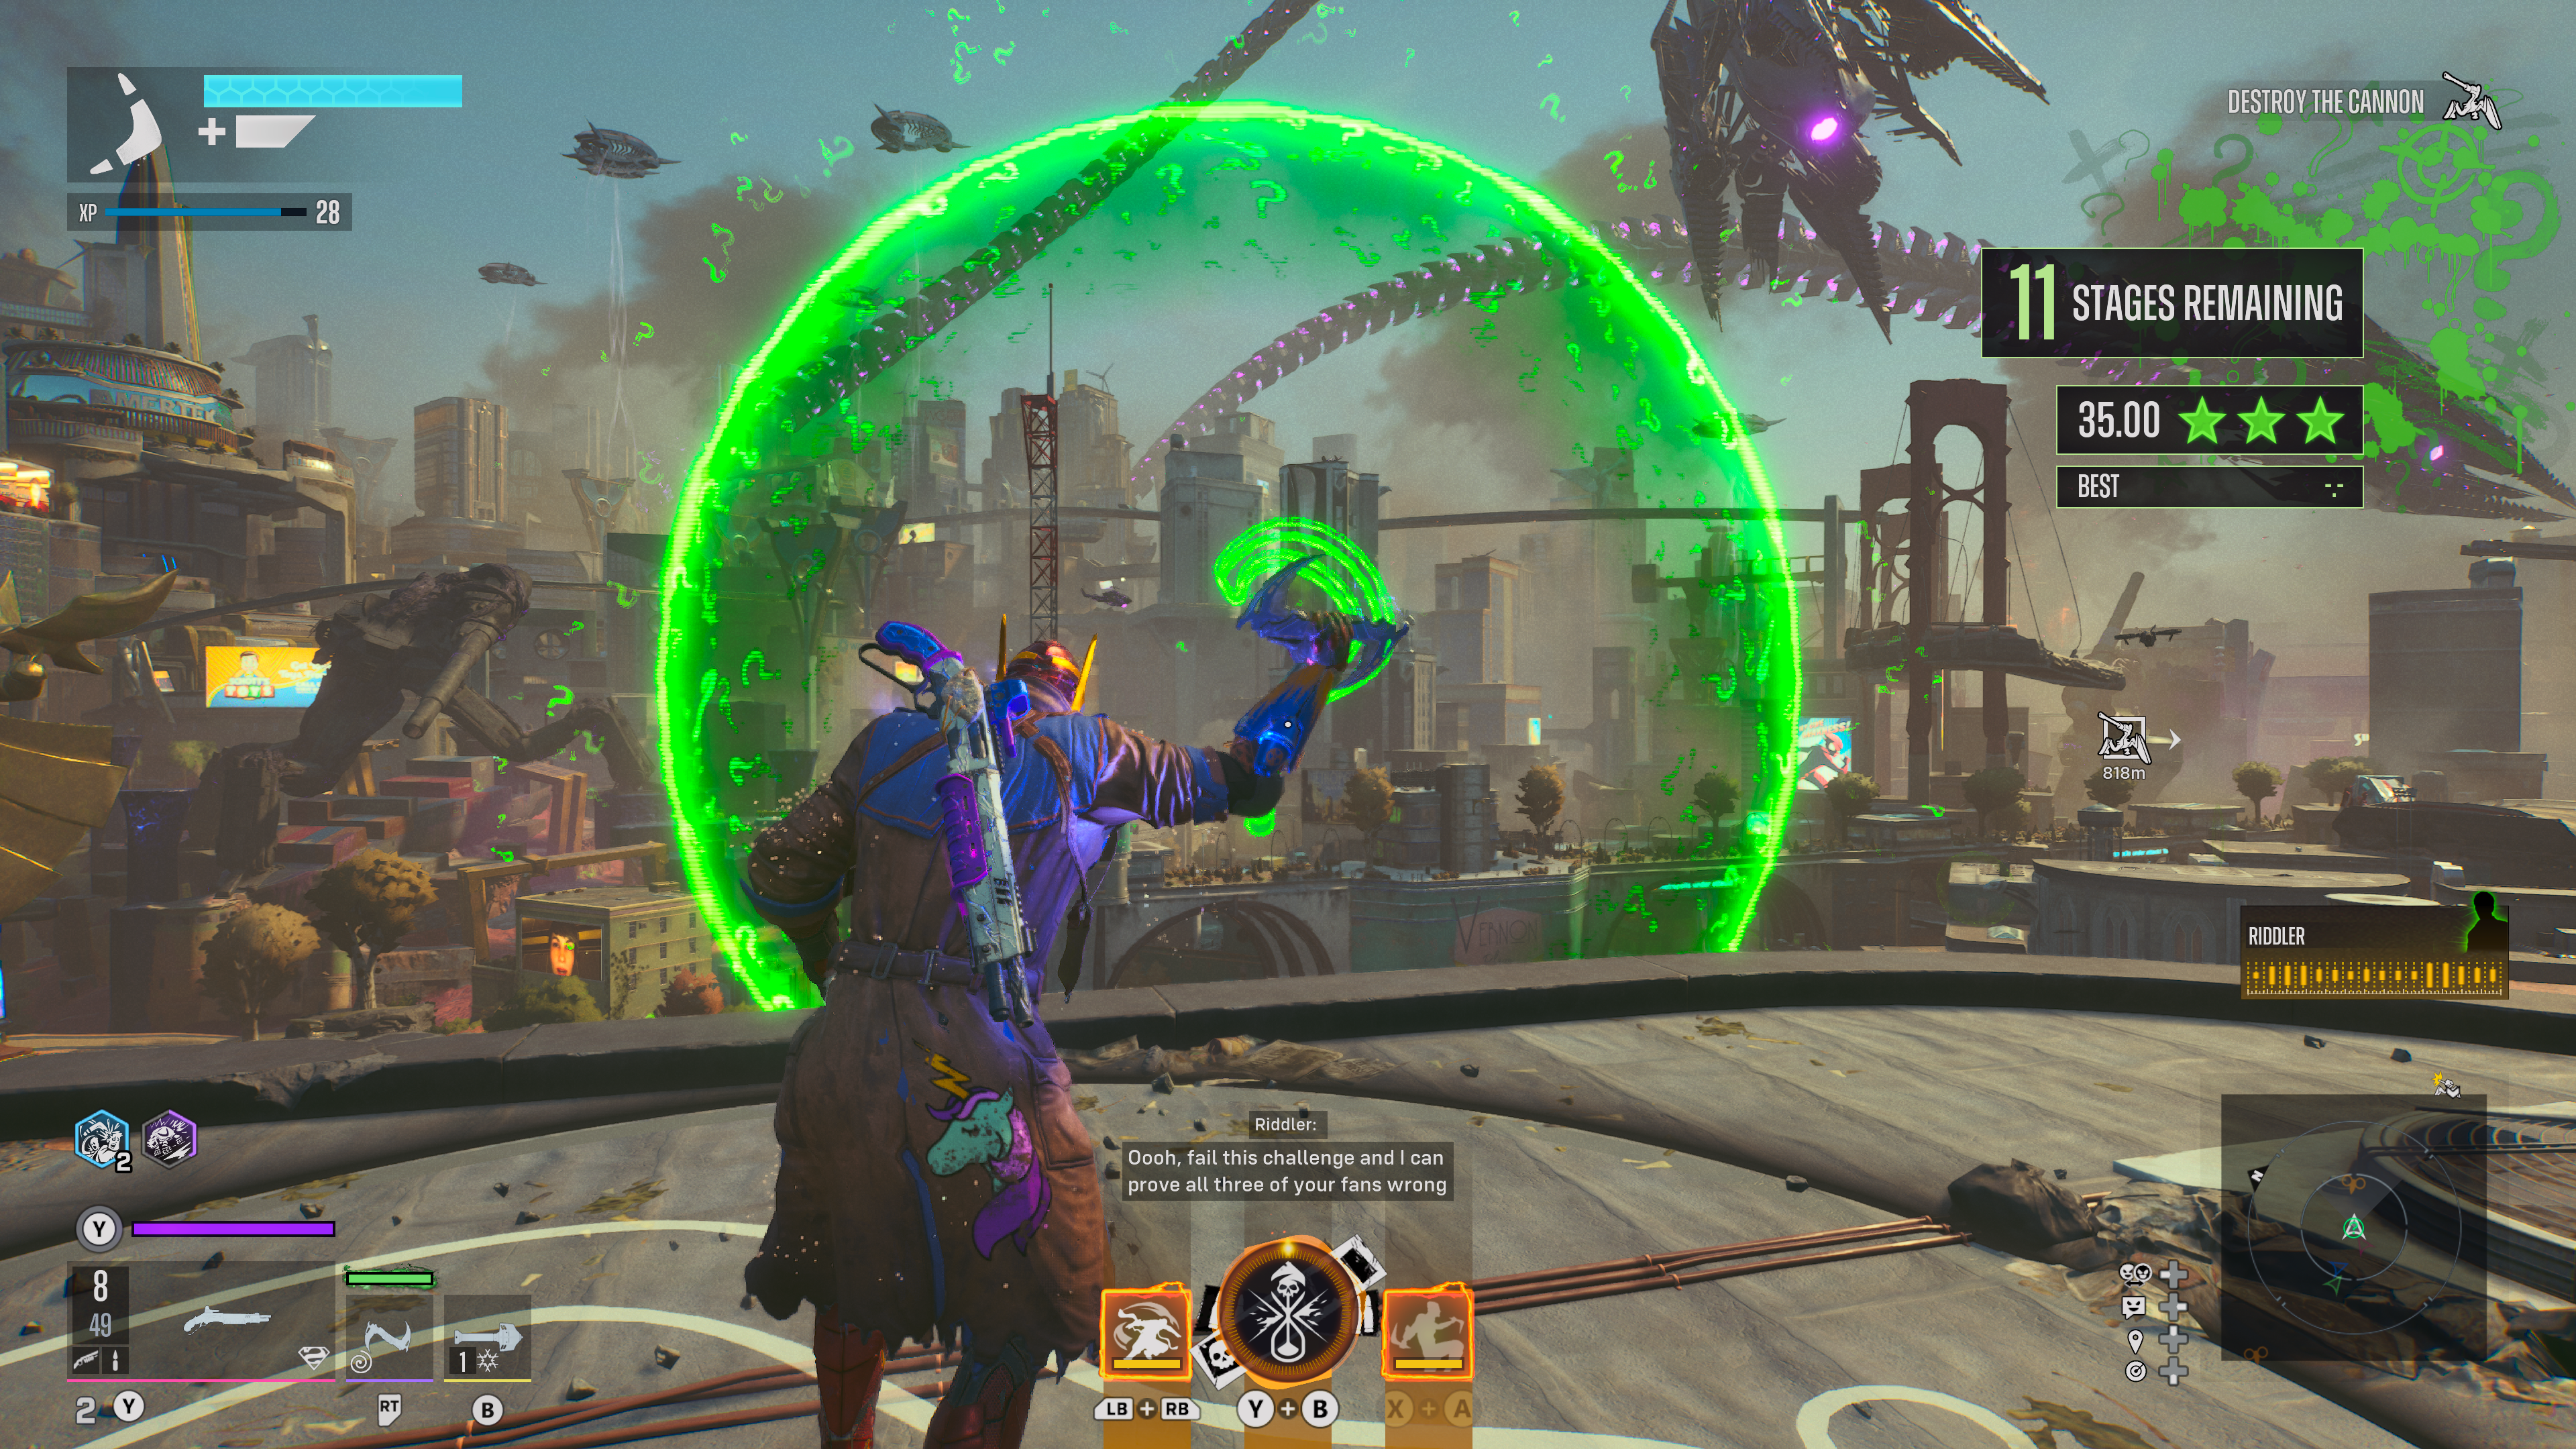 Screenshot: Riddler time trial with big green hoop